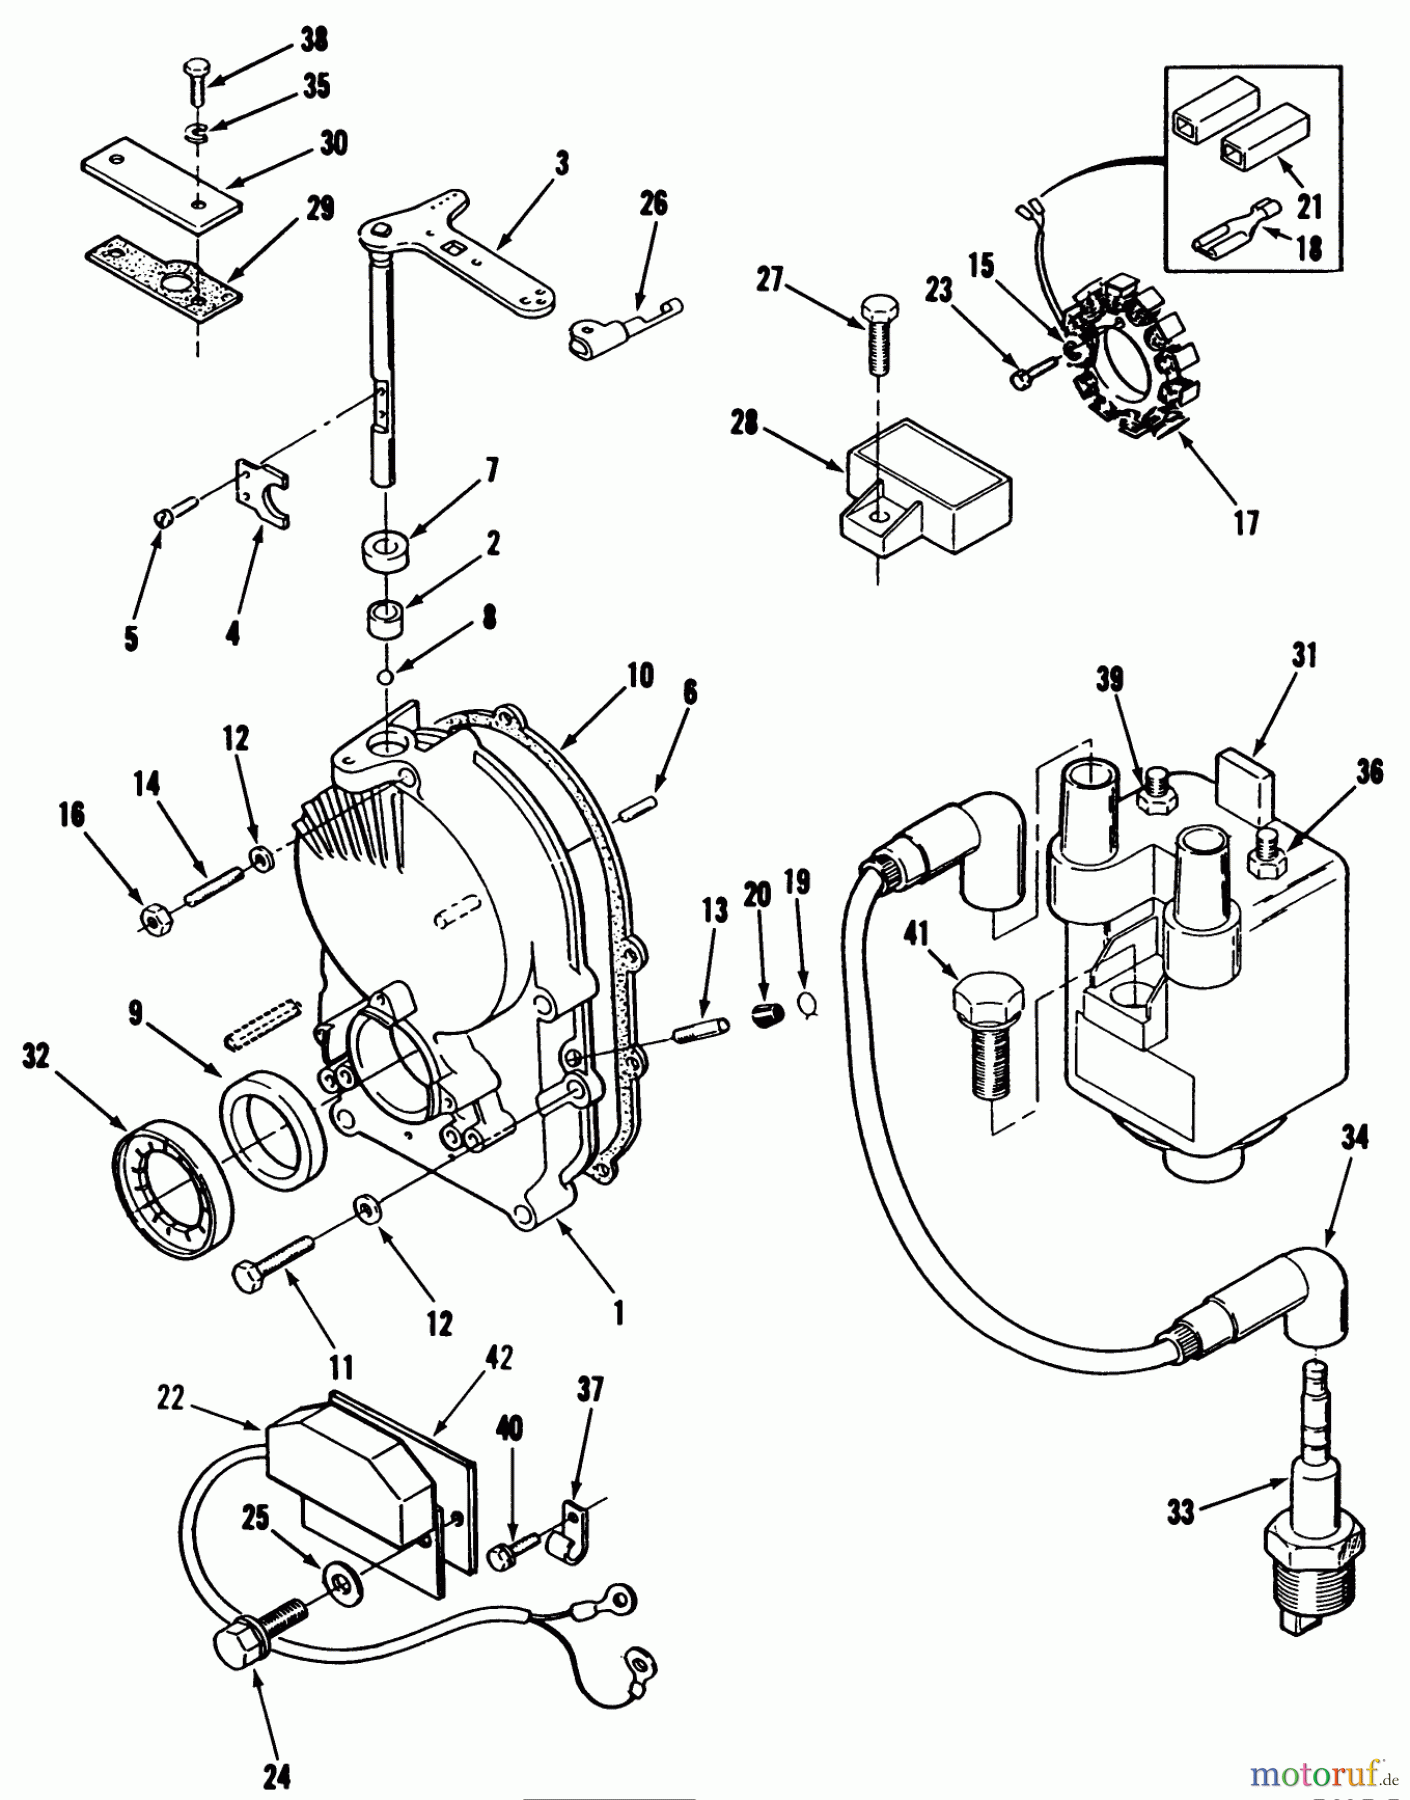  Toro Neu Mowers, Lawn & Garden Tractor Seite 1 51-16OE01 (416-H) - Toro 416-H Garden Tractor, 1991 (1000001-1999999) GEARCASE AND IGNITION CONTROLS